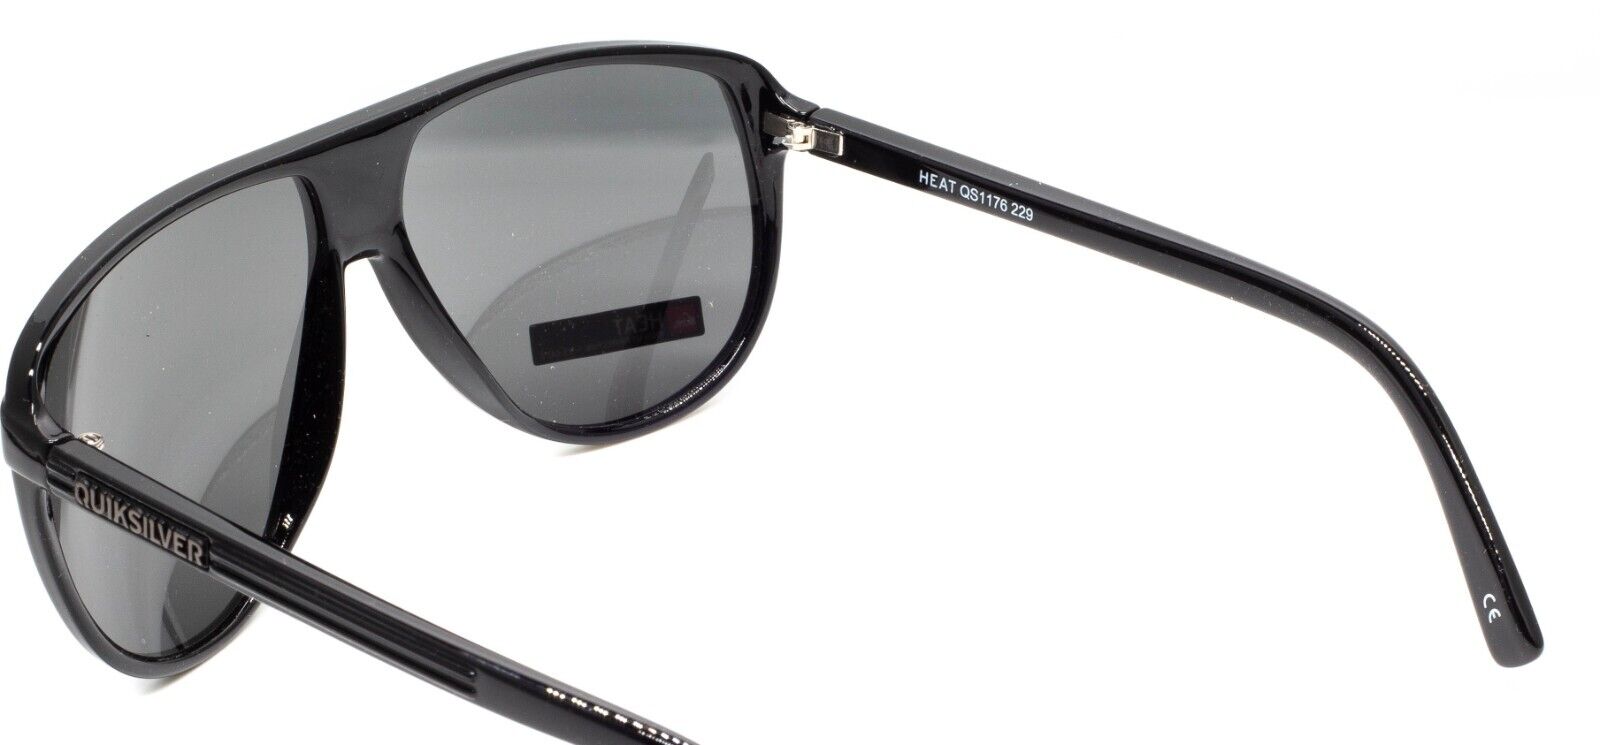 QUIKSILVER HEAT QS1176 229 4231441 59mm Eyewear Shades Eyewear - Glasses -Italy GGV Sunglasses